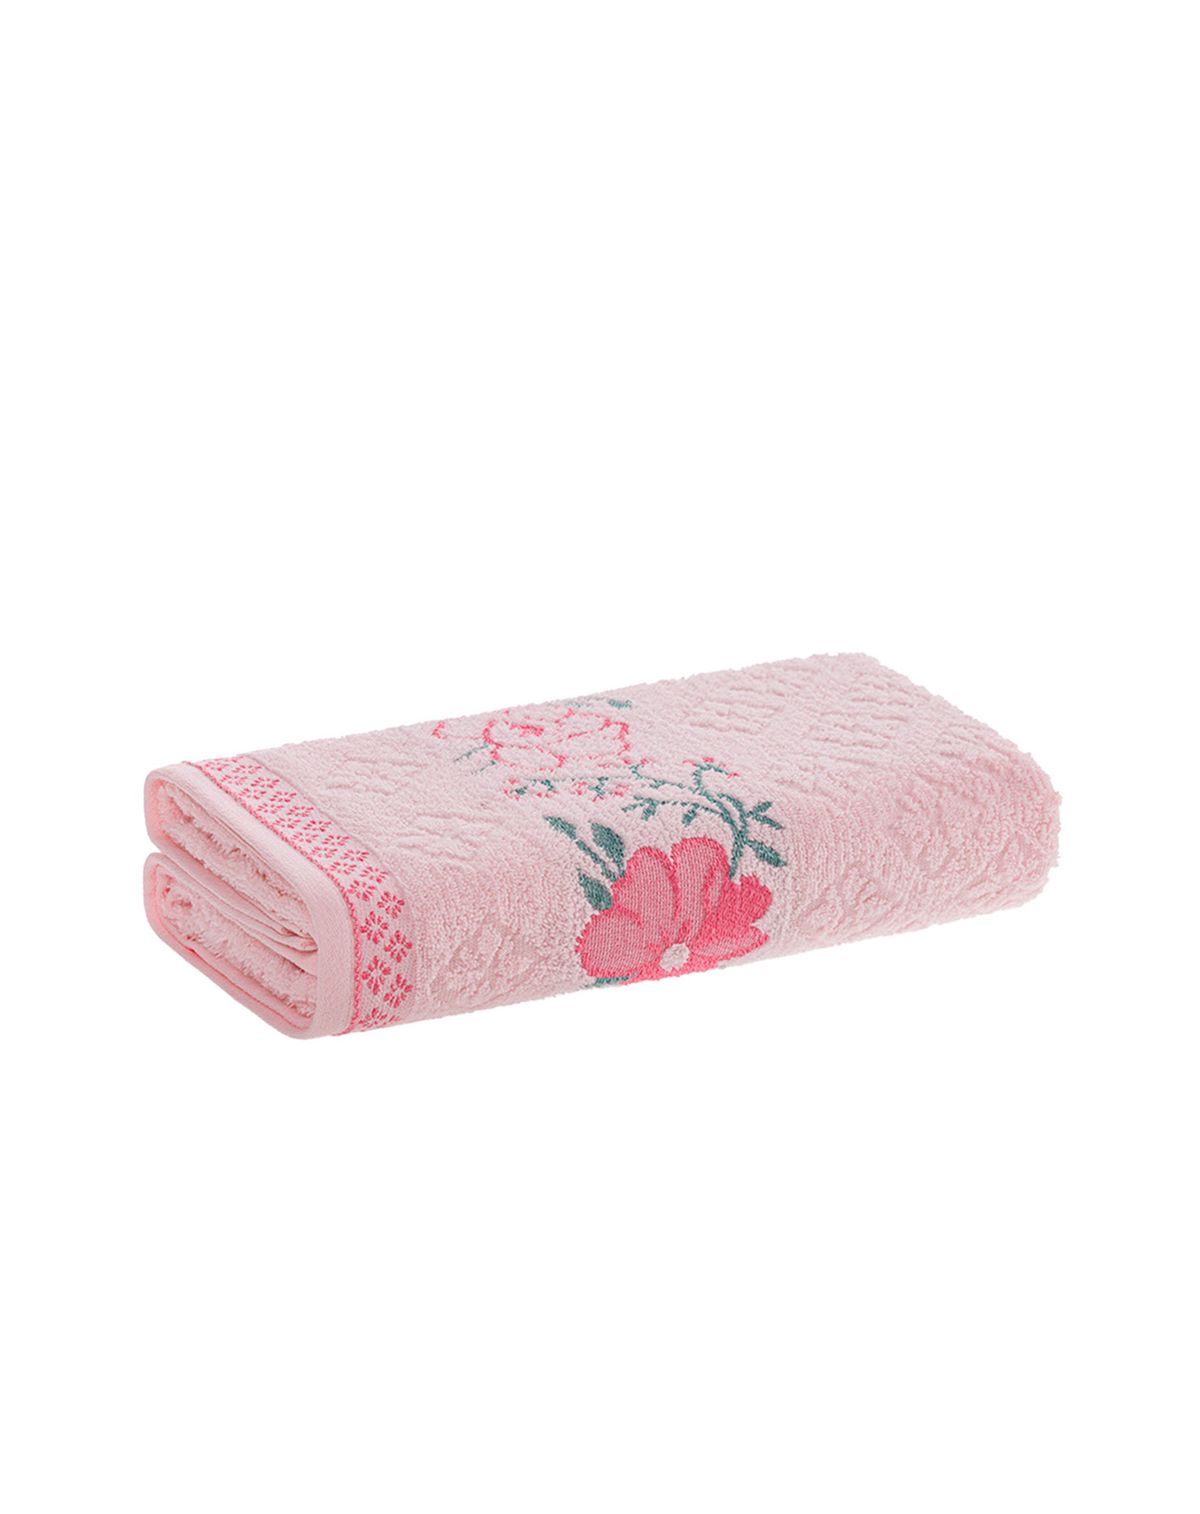 689334001-toalha-de-banho-karsten-bordada-floral-rosa-u-c50